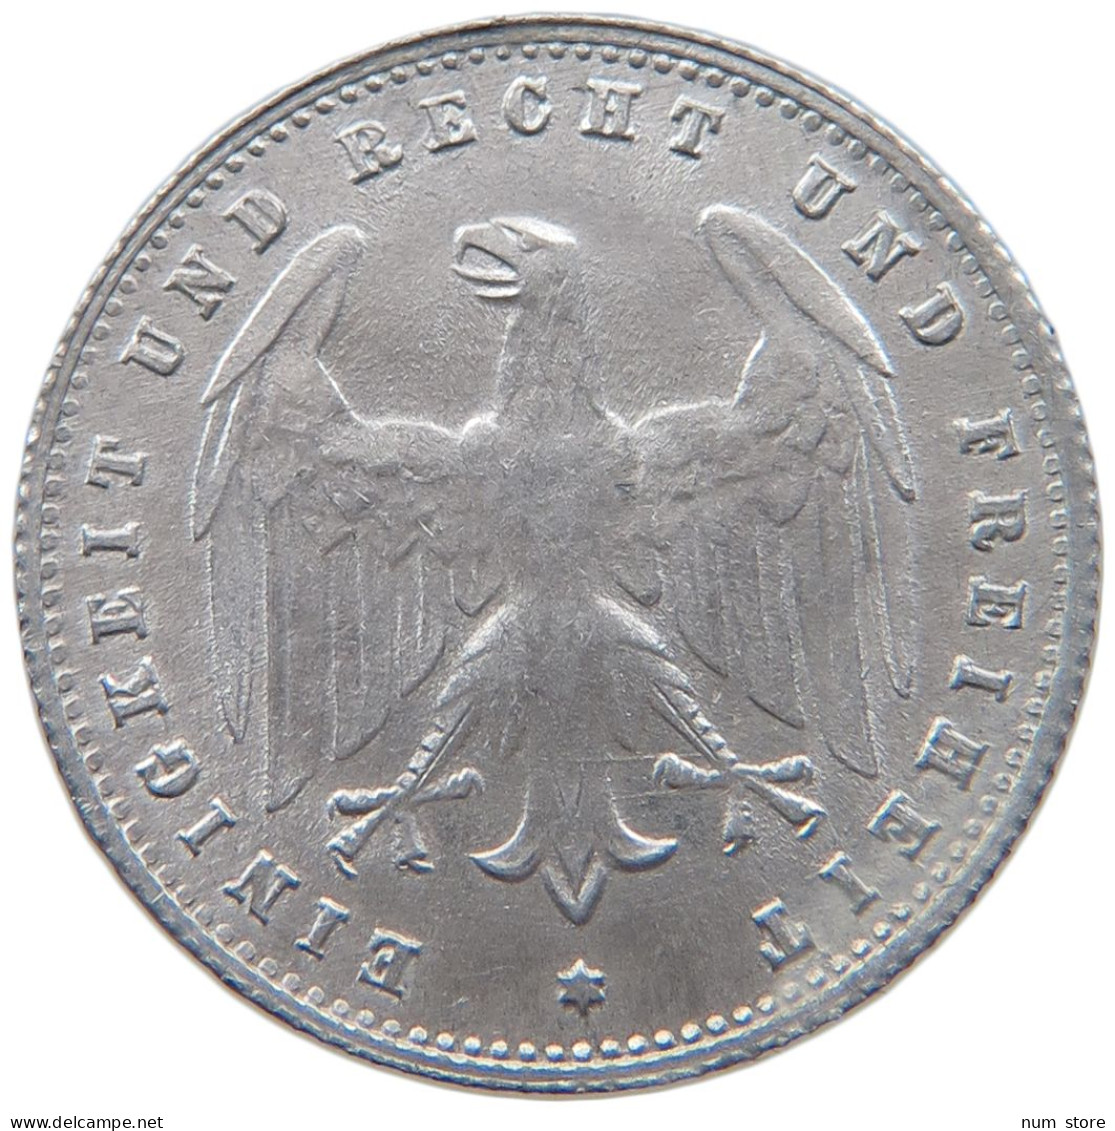 WEIMARER REPUBLIK 200 MARK 1923 G  #MA 098781 - 200 & 500 Mark